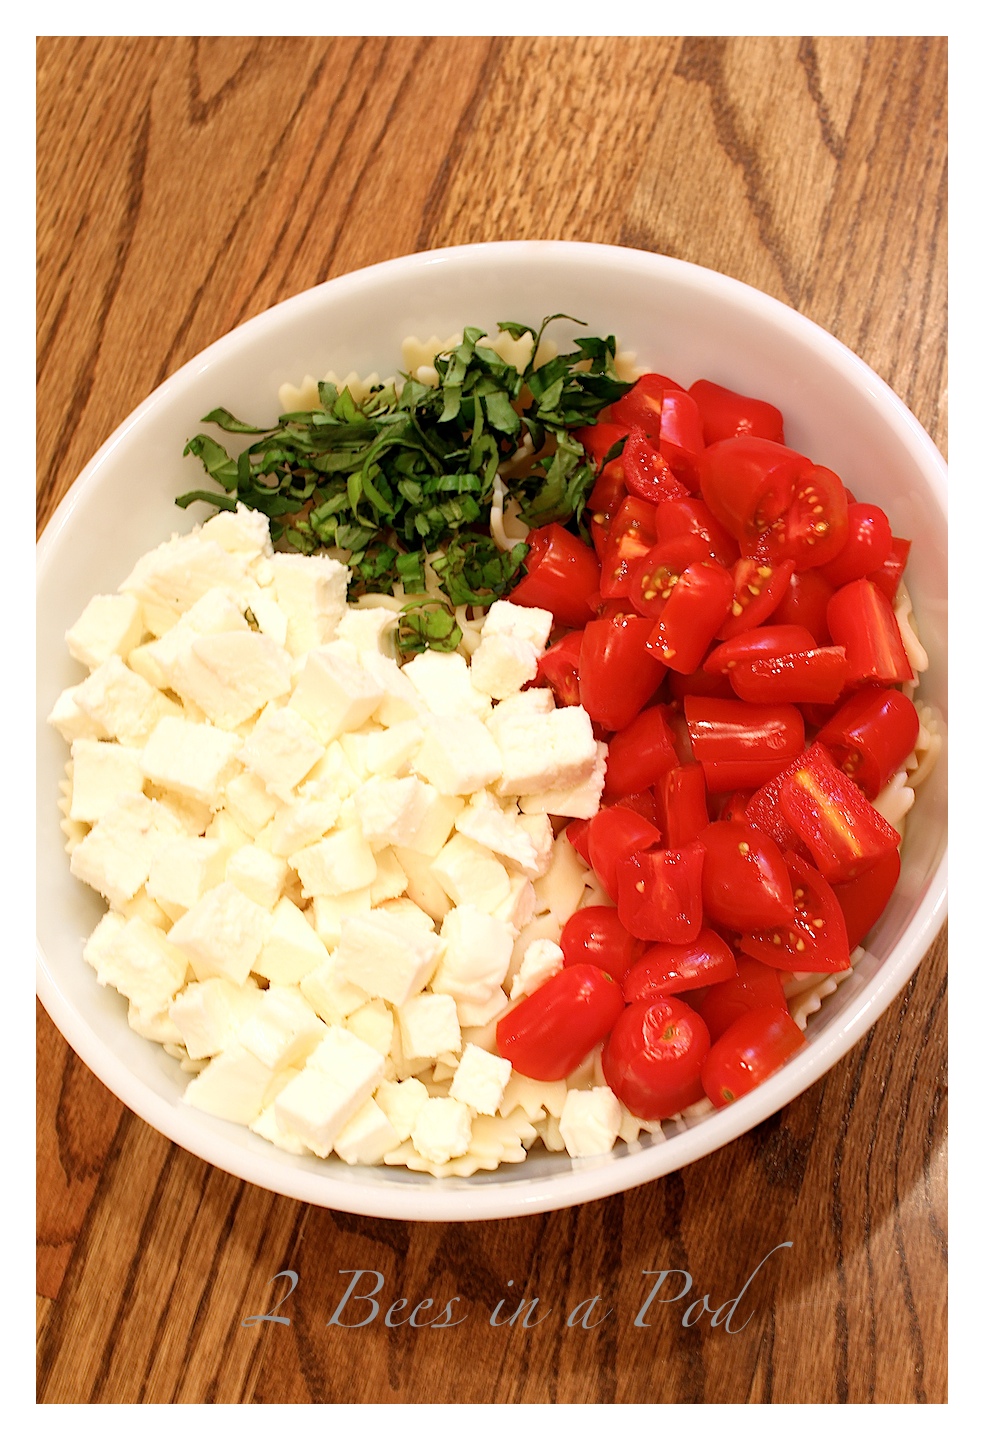 Caprese Pasta Salad - Perfect Summertime Recipe. Wonderful side dish or main dish.